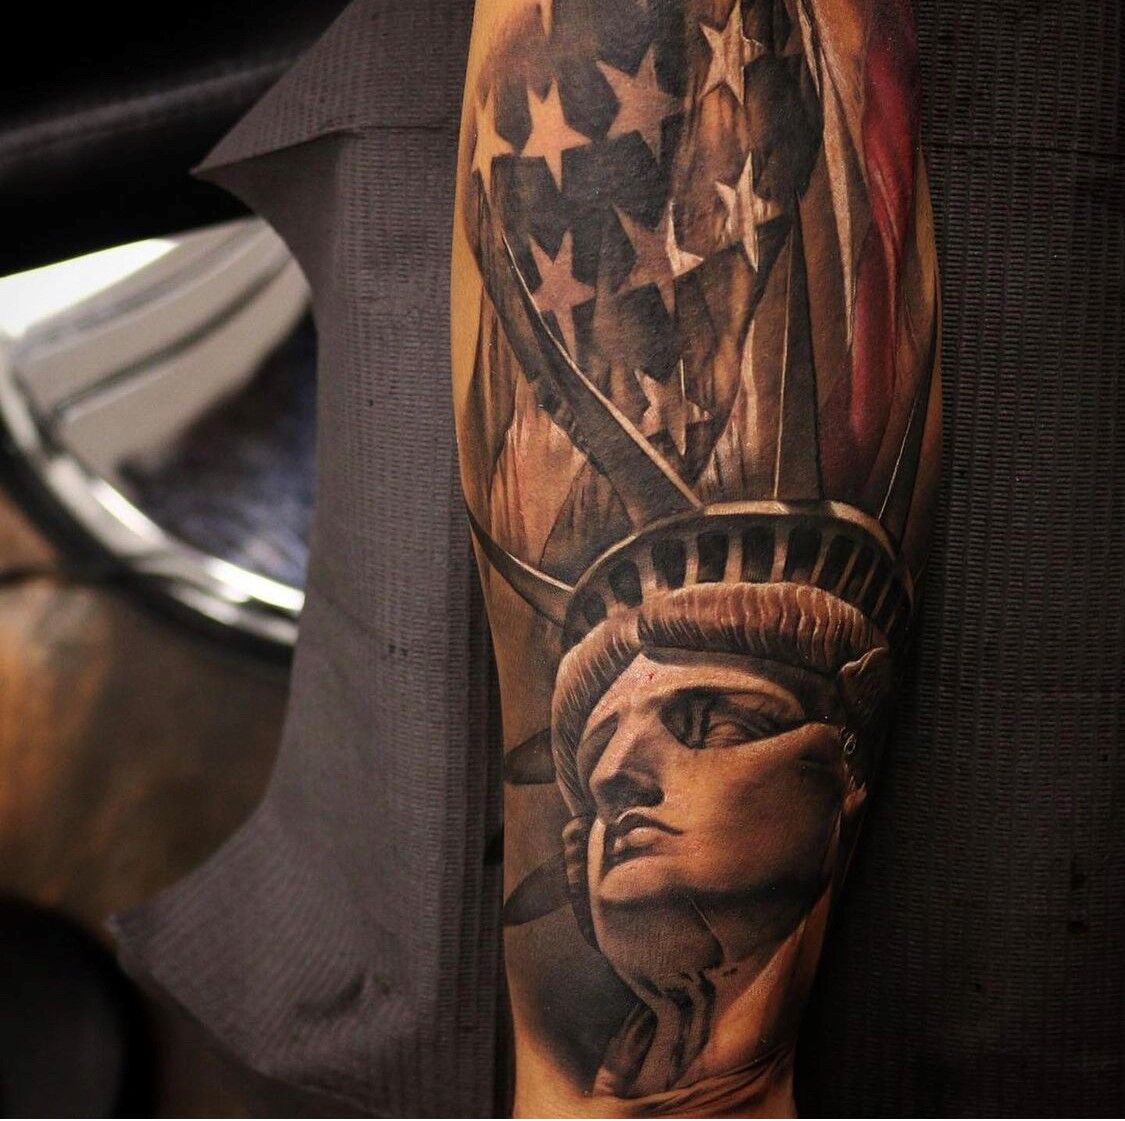 Celebrity tattoo artists will ink locals during 2week popup at Northwoods  Mall  Charleston Scene  postandcouriercom